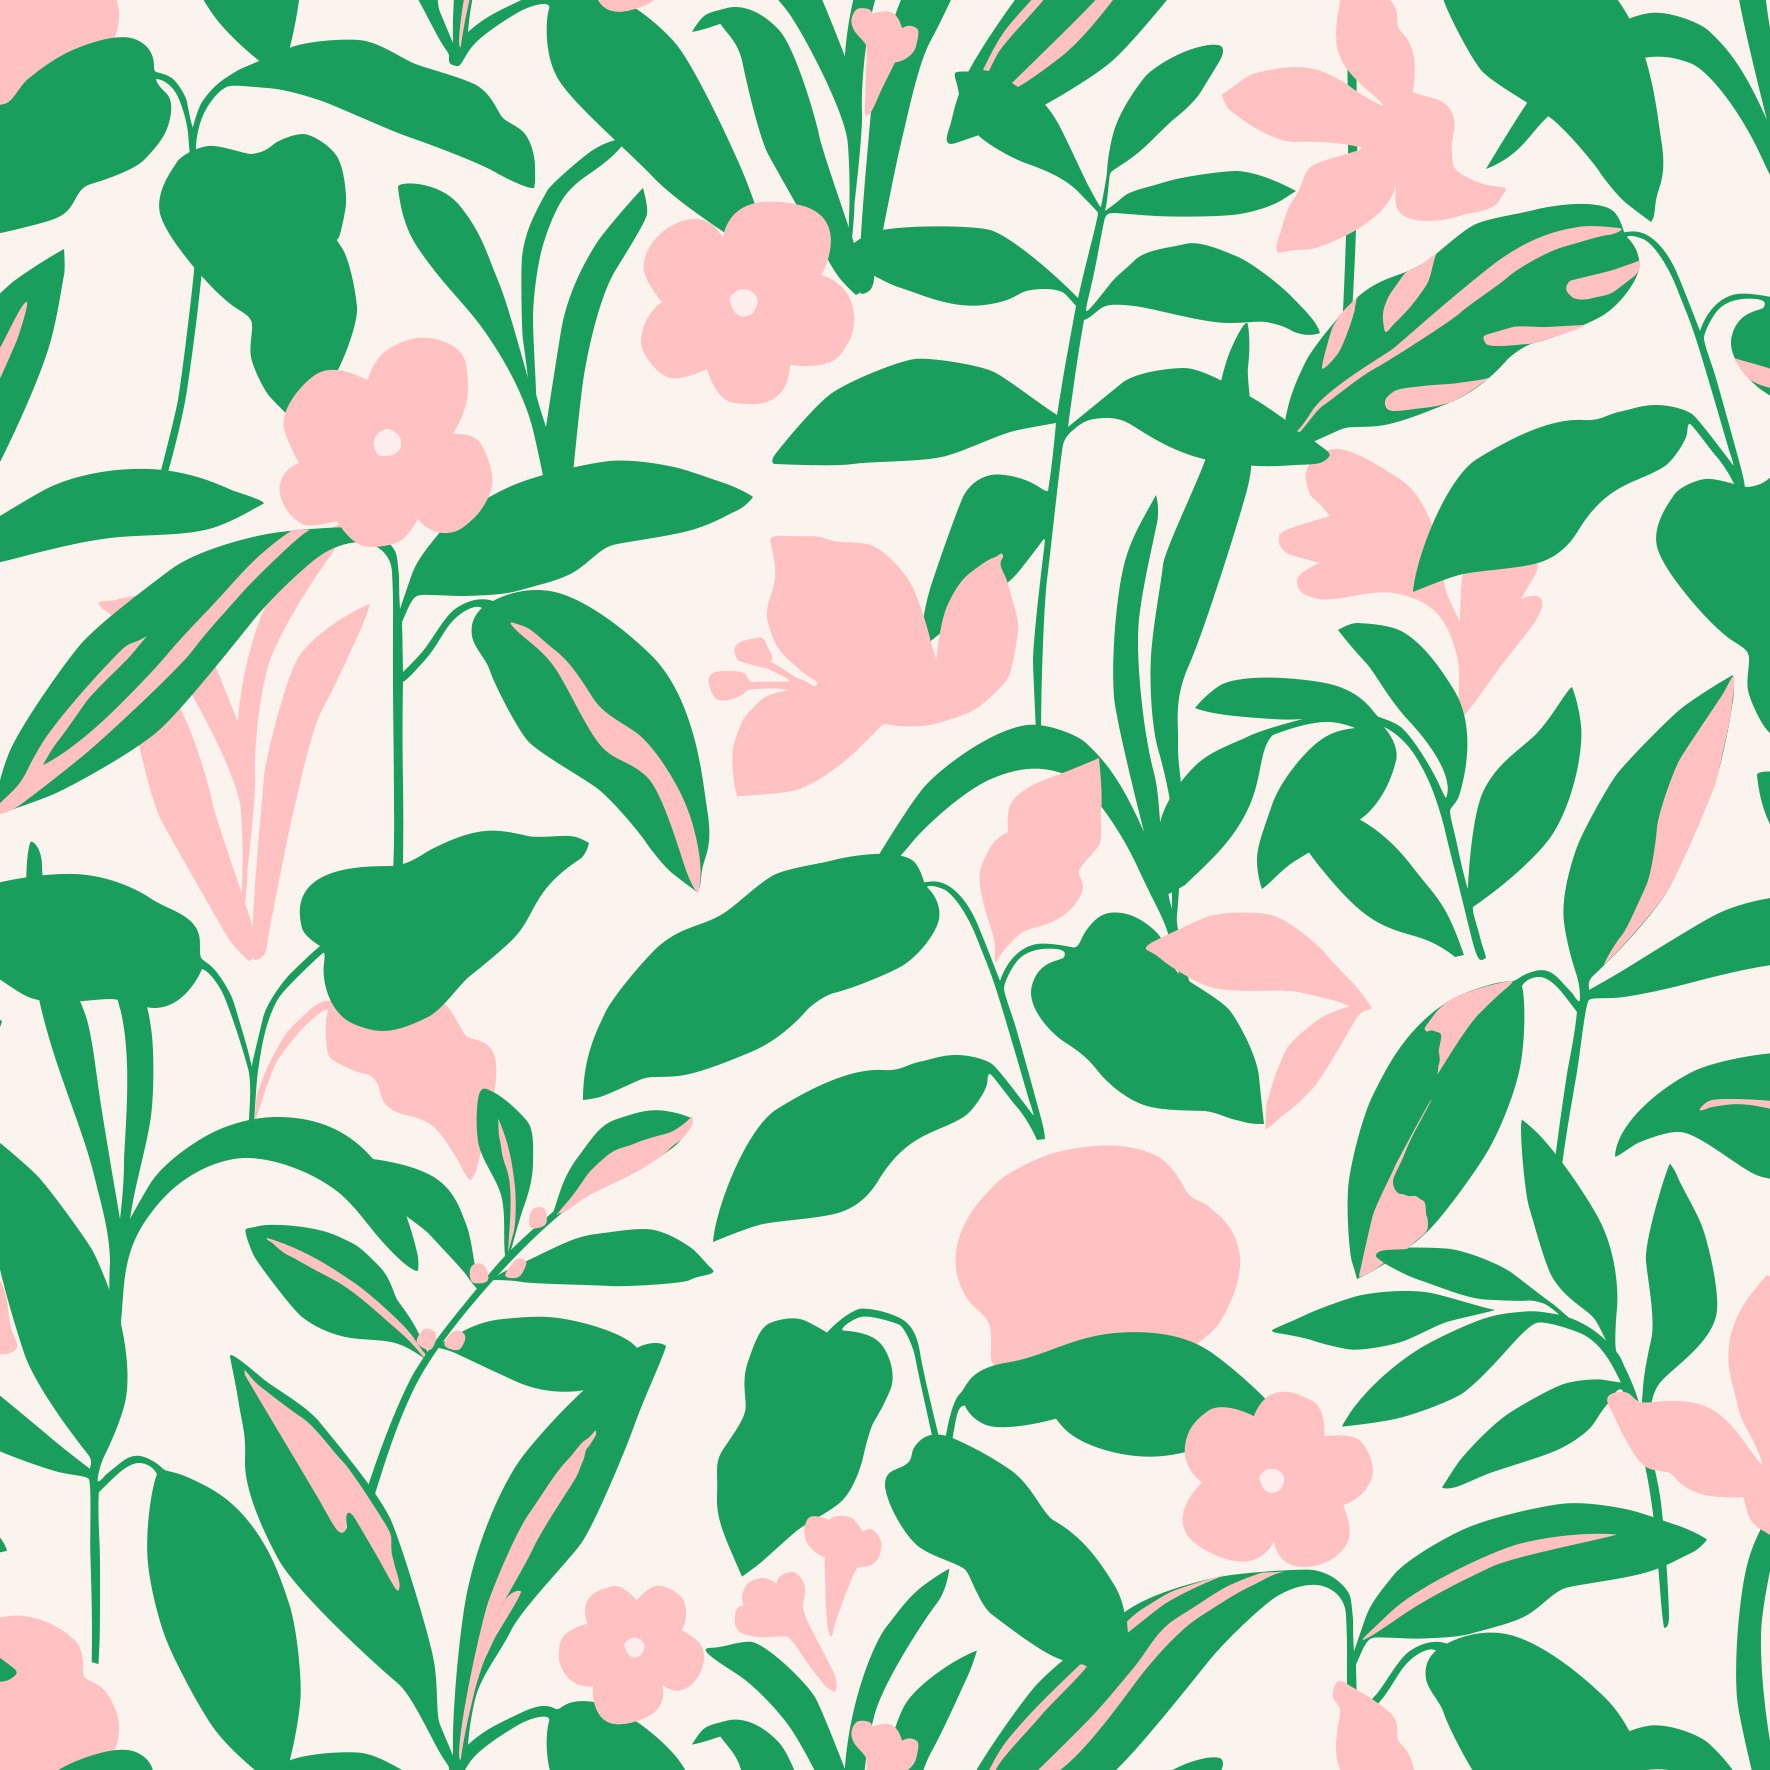 Palmsprings-square-green-pink2.jpg